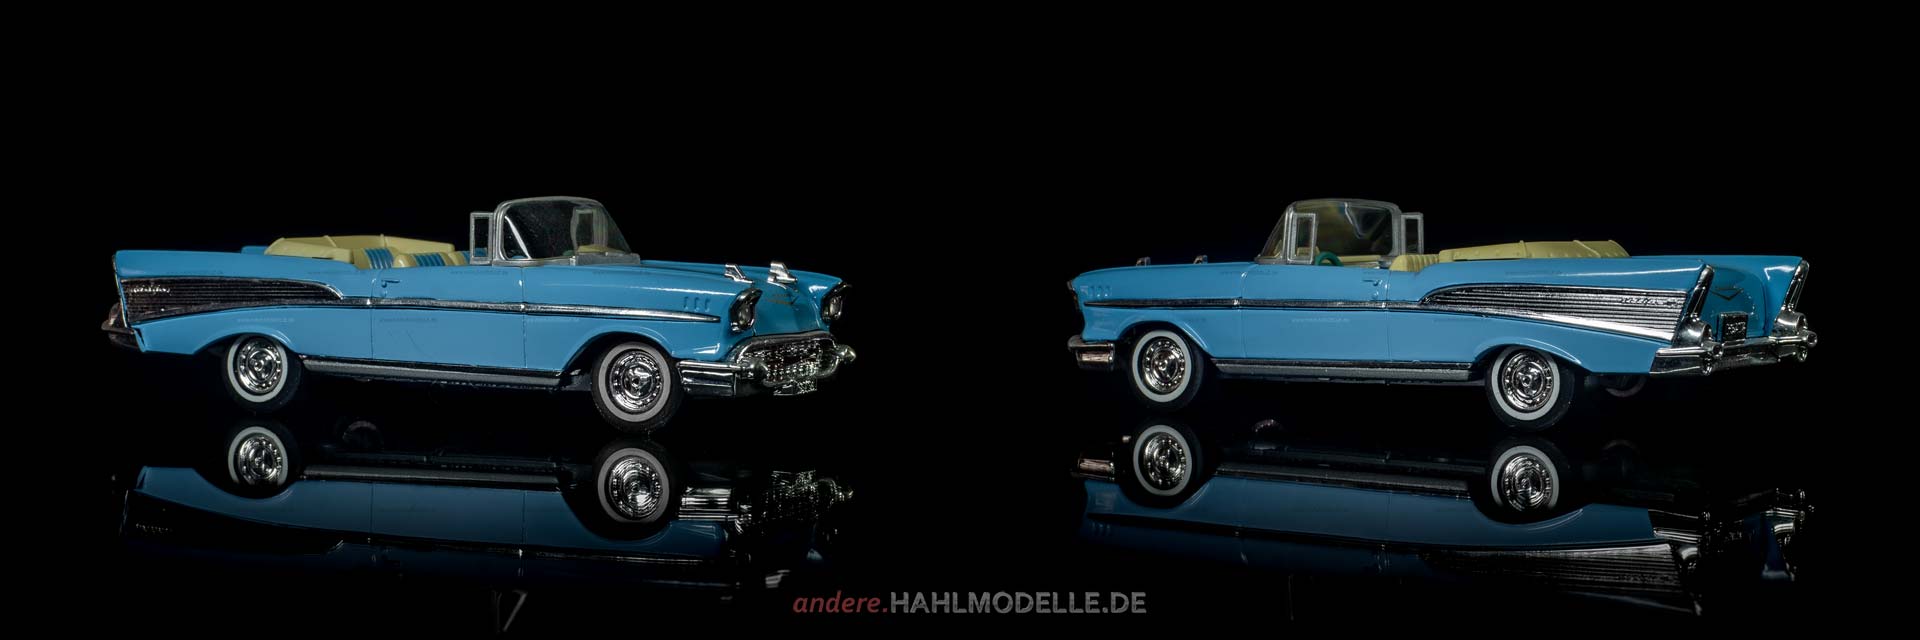 Chevrolet Bel Air (Serie 2400C) Convertible | Cabriolet | Dinky | 1:43 | www.andere.hahlmodelle.de